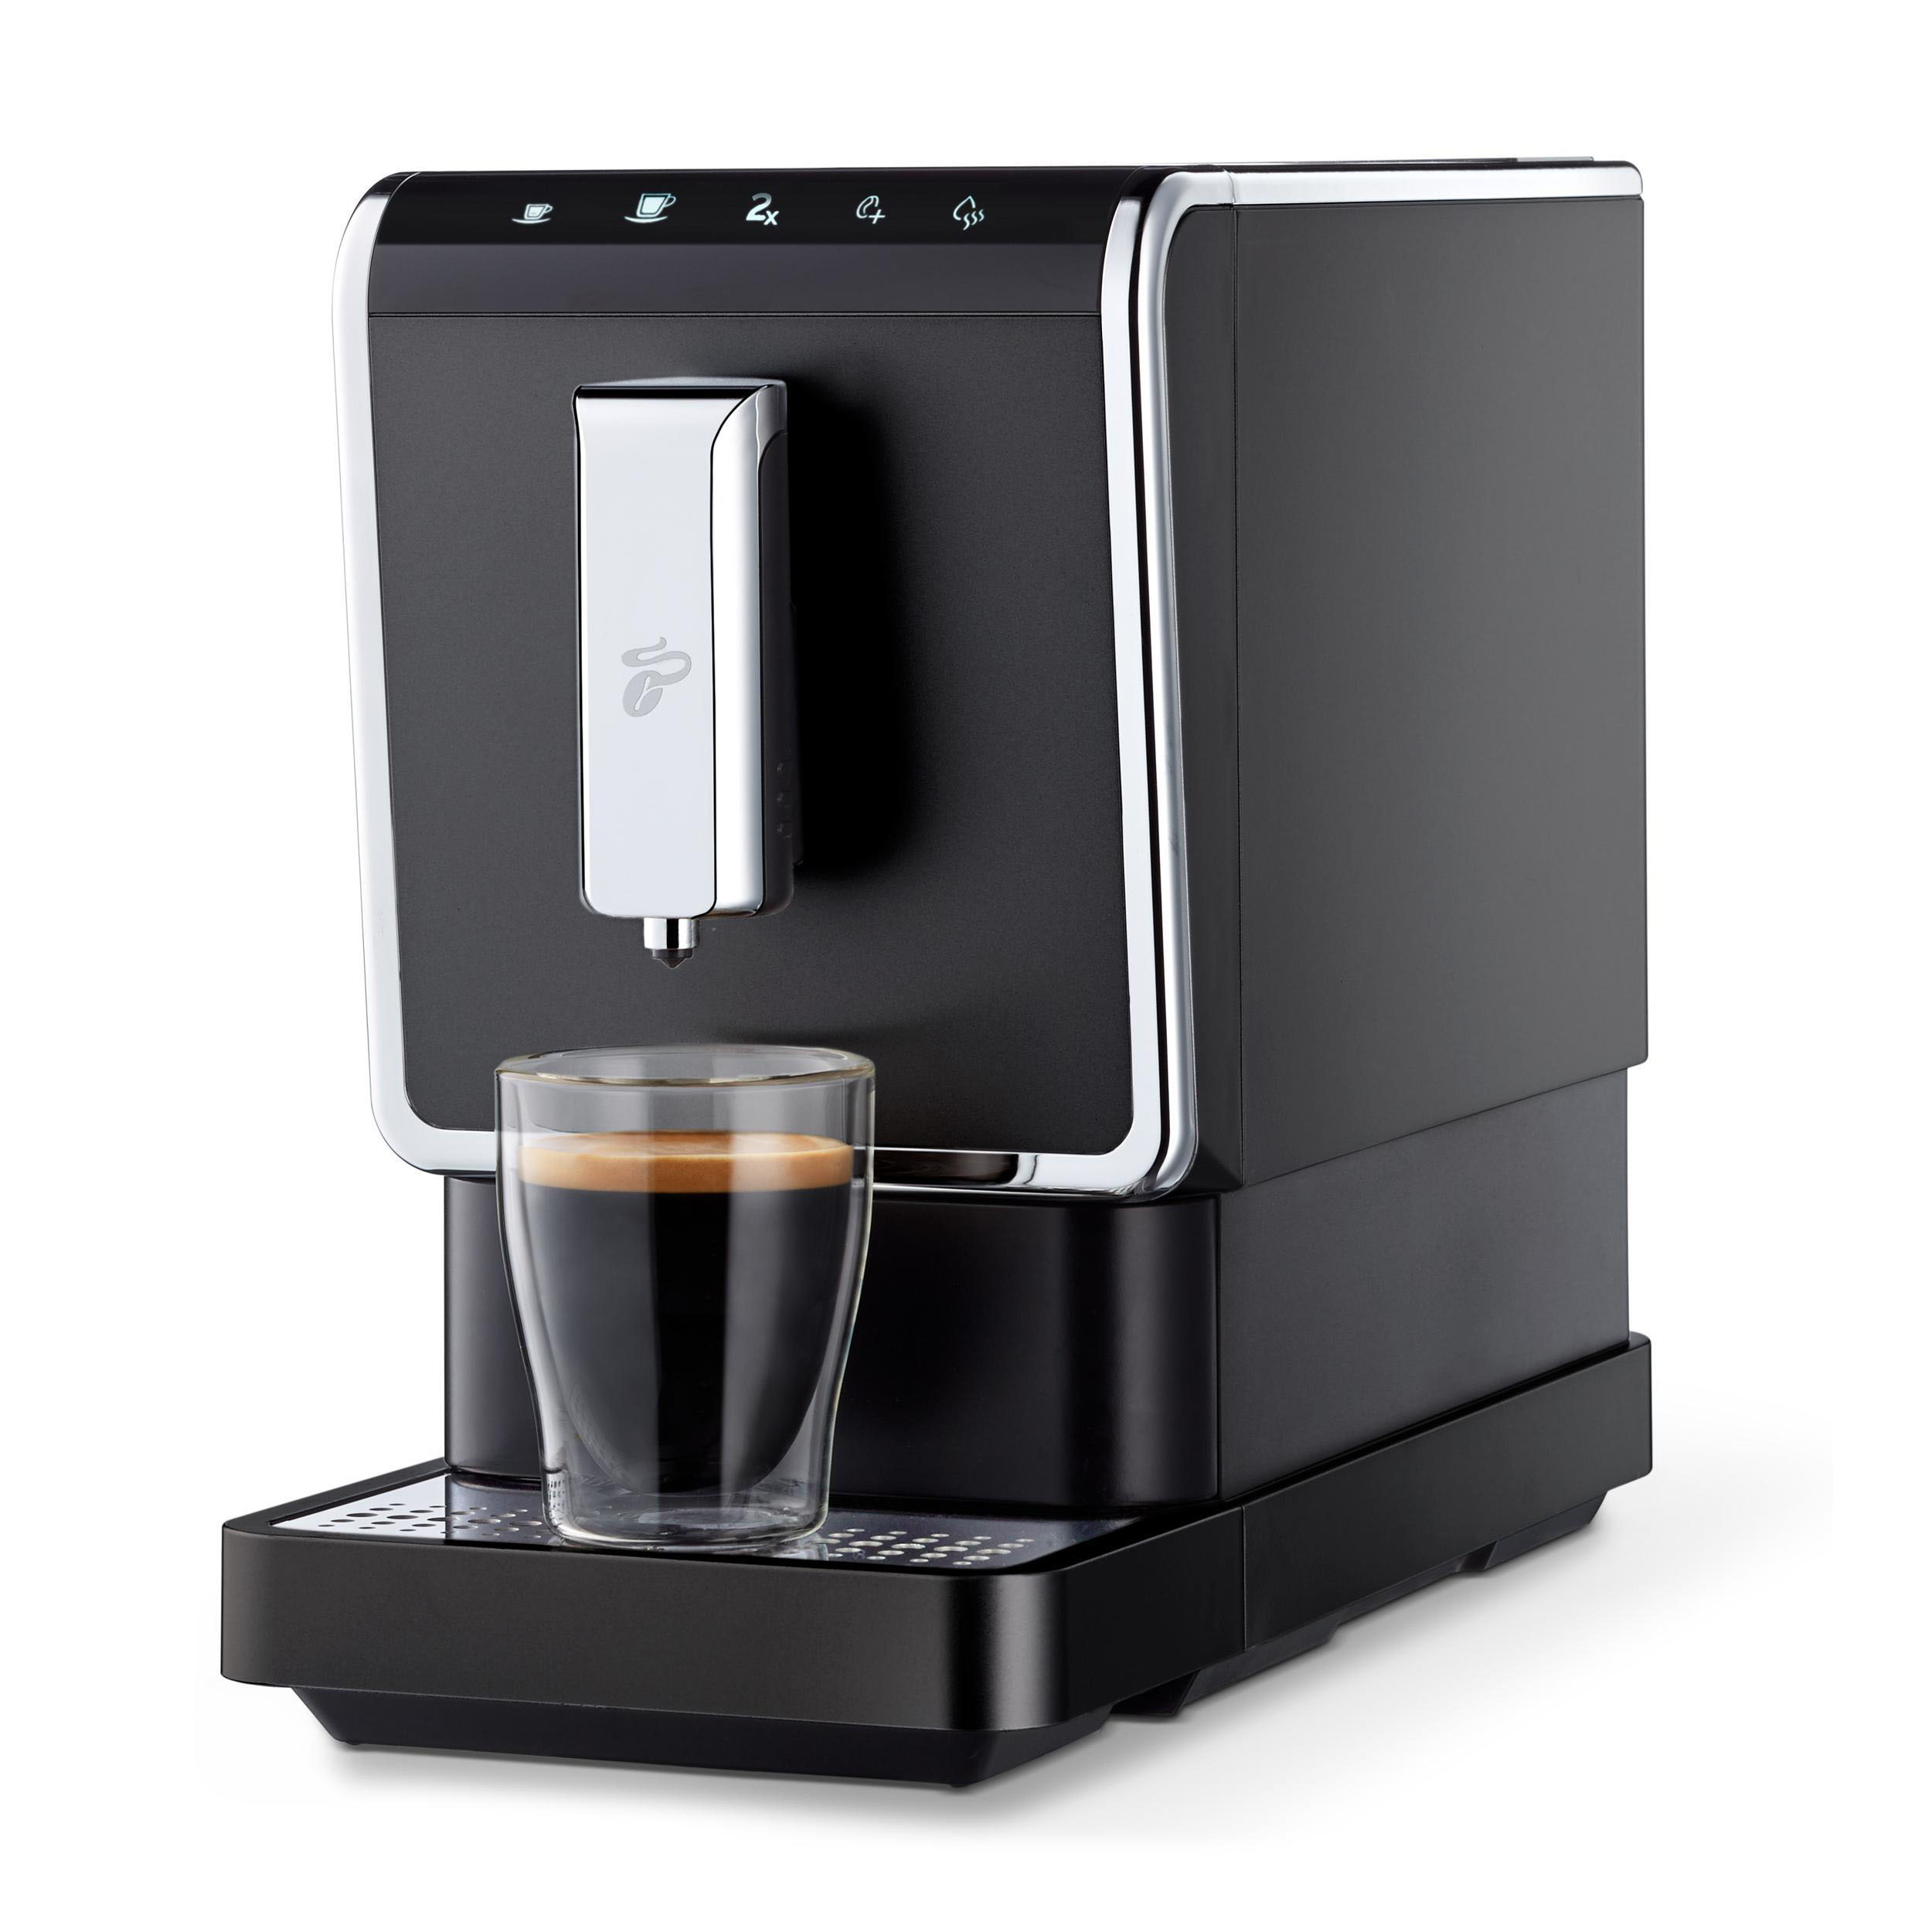 1.1 TCHIBO Esperto Anthrazit Kaffeevollautomat Caffè